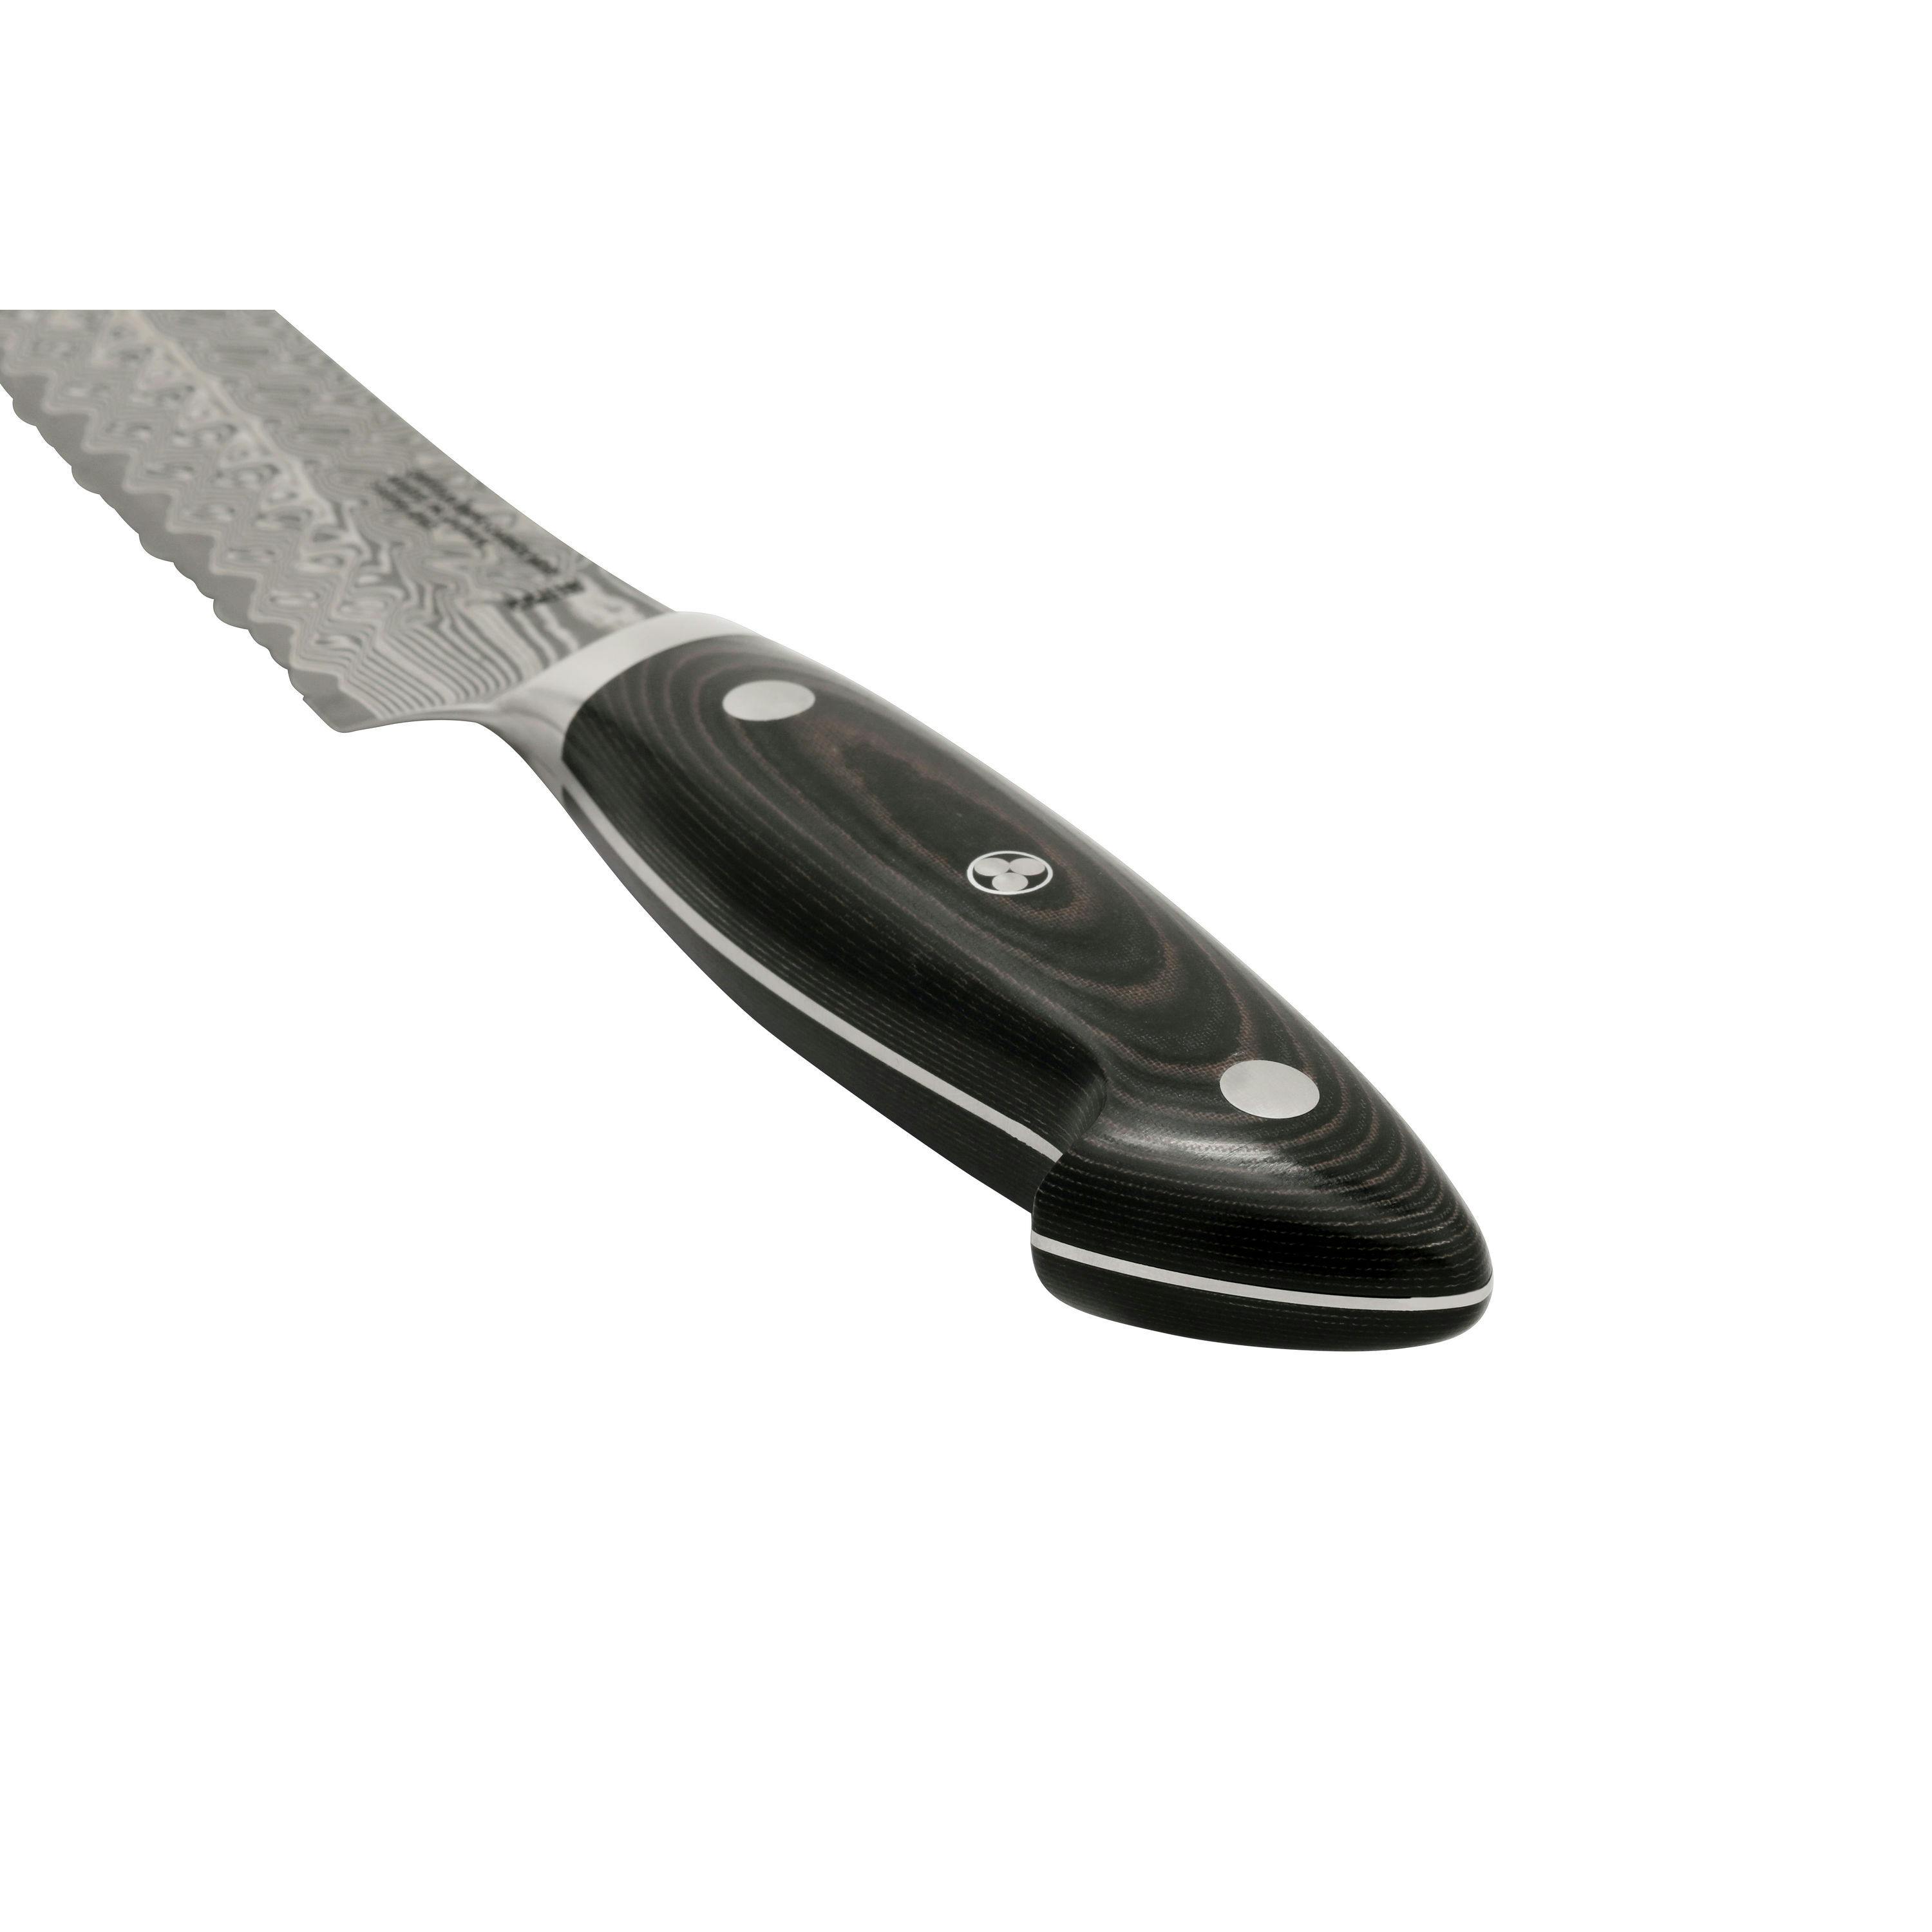 Kramer by Zwilling Euroline Damascus Collection 5 Utility Knife